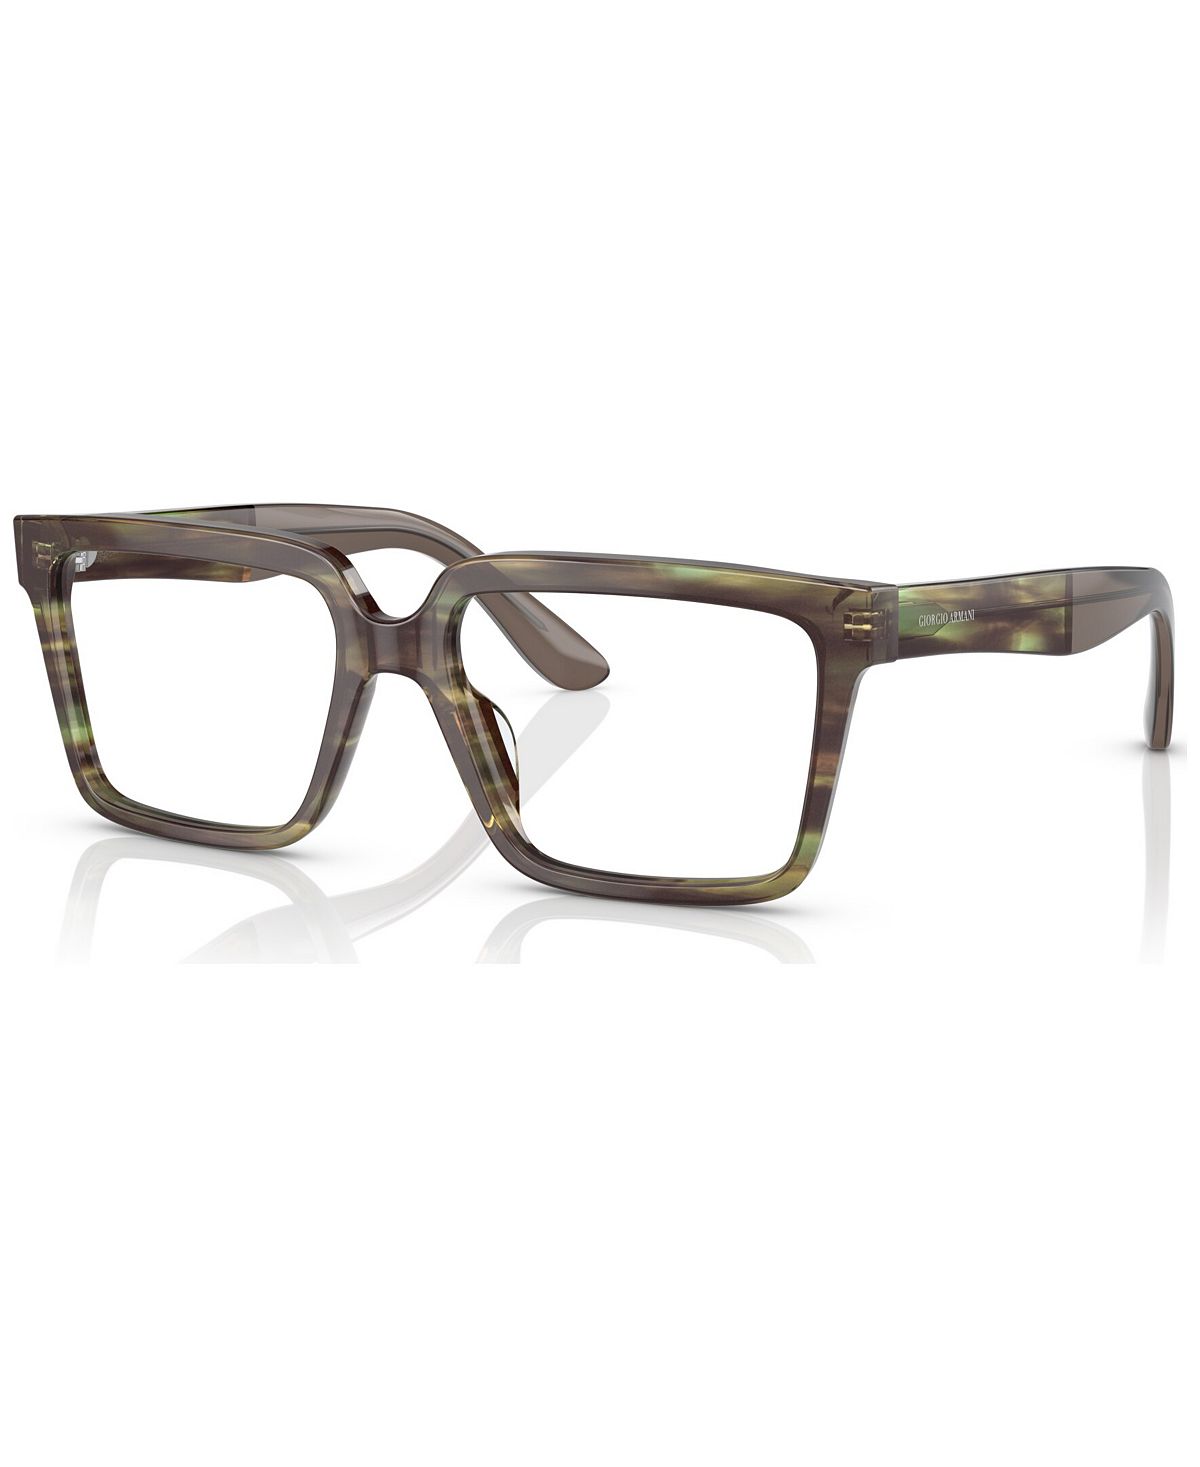 Мужские квадратные очки, AR7230U55-O Giorgio Armani цена и фото